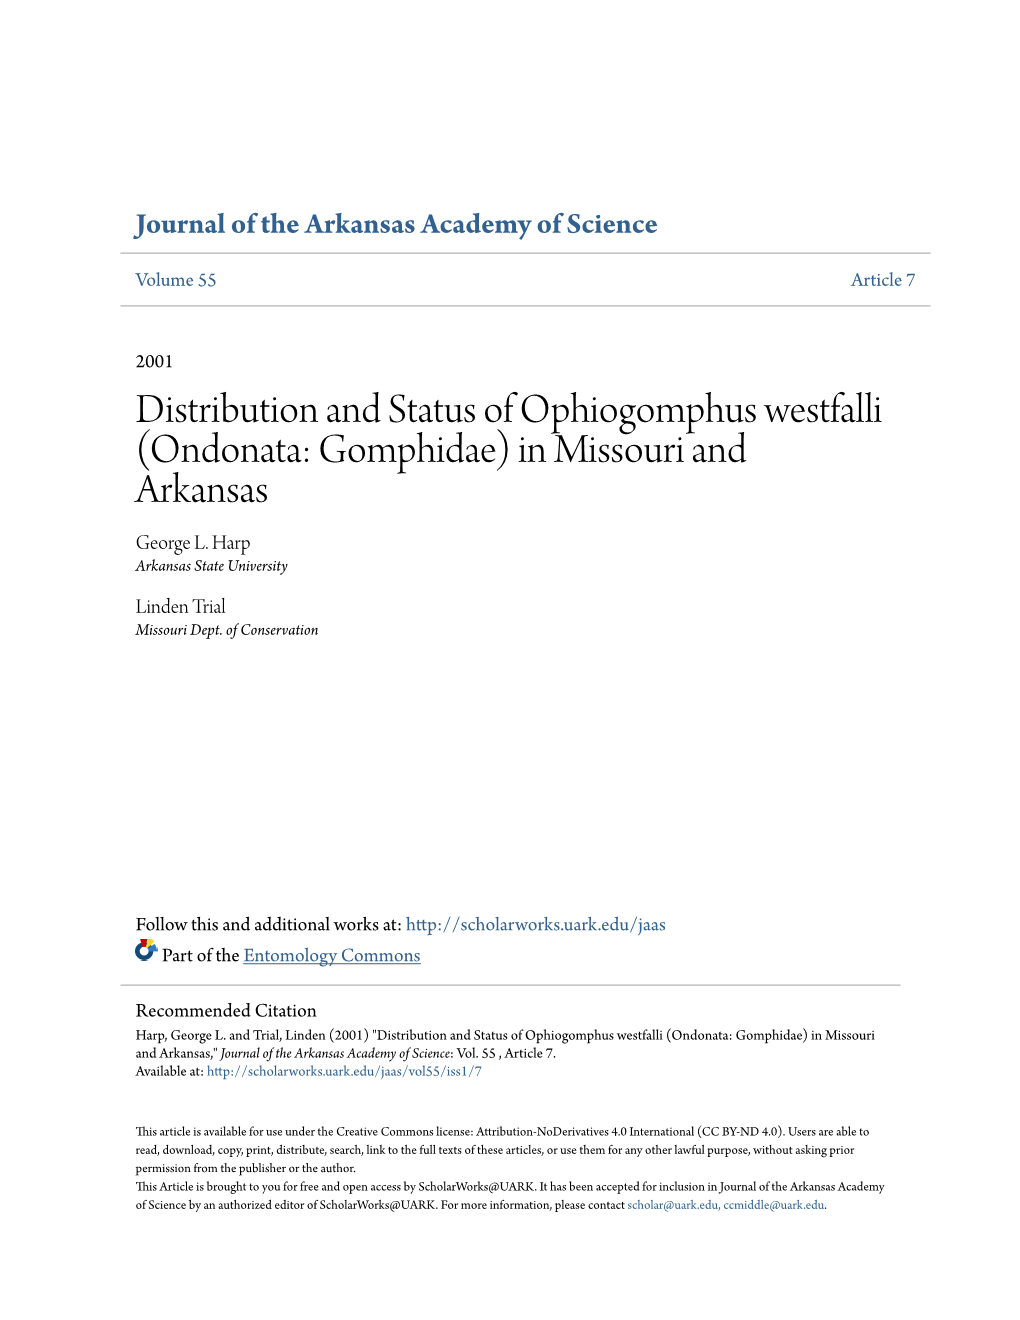 Ondonata: Gomphidae) in Missouri and Arkansas George L